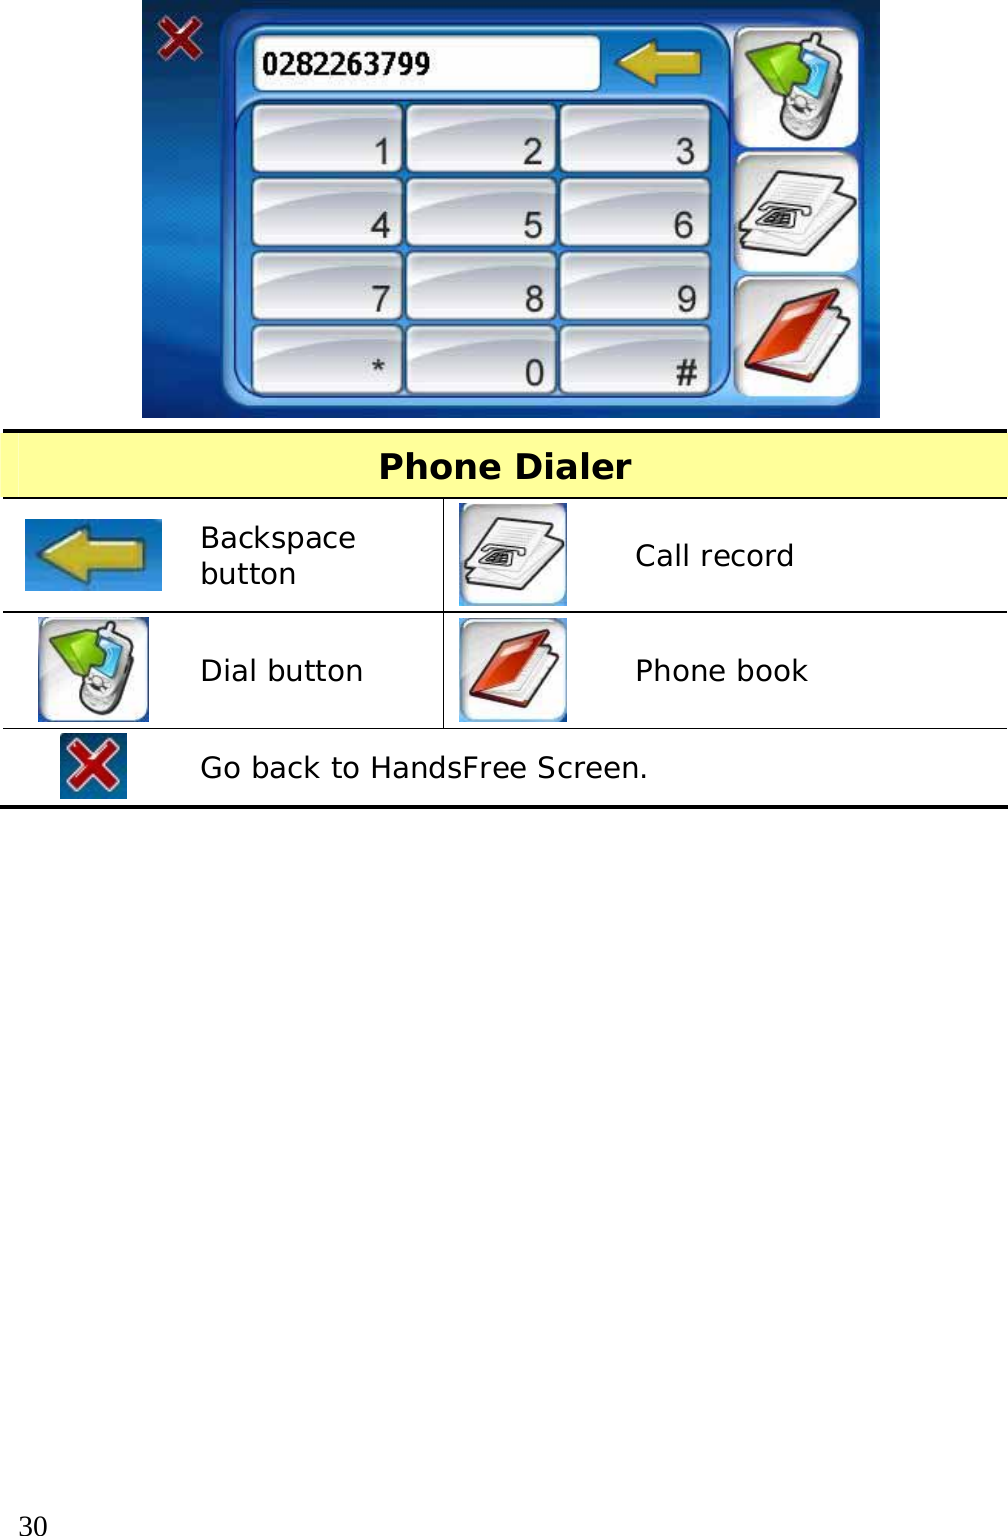  30   Phone Dialer  Backspace button   Call record  Dial button   Phone book  Go back to HandsFree Screen.  